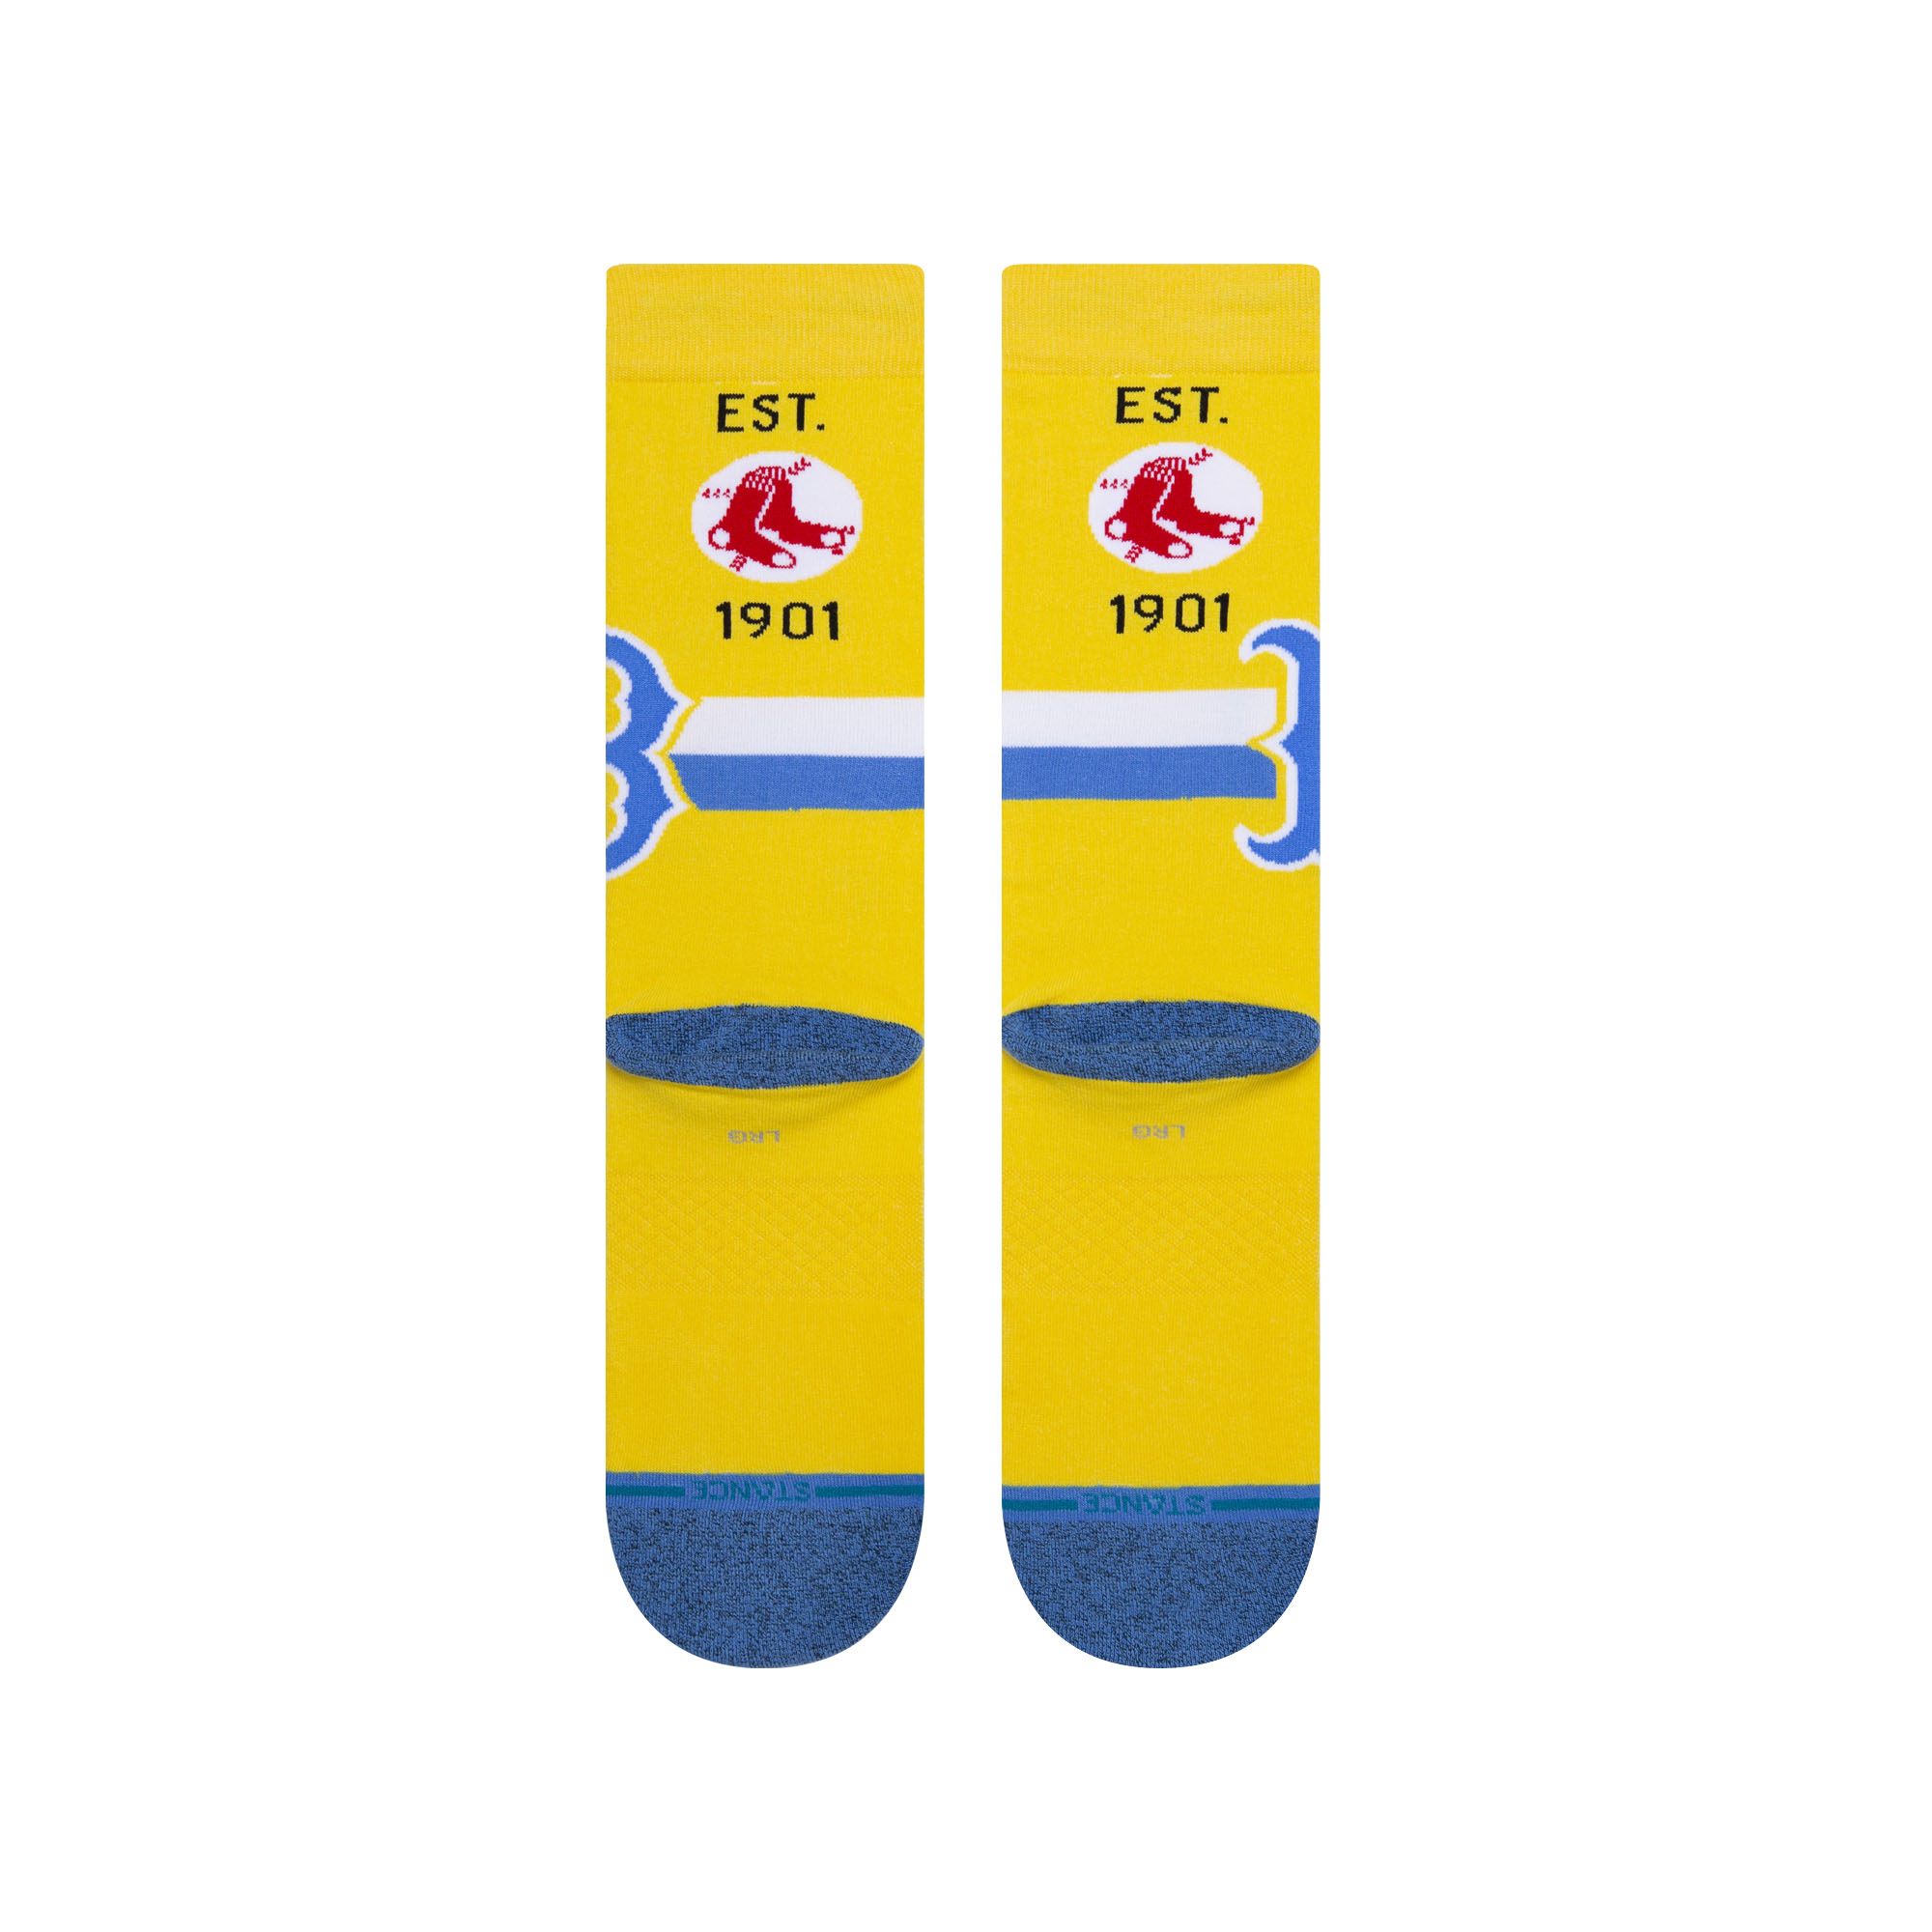 red sox yellow socks